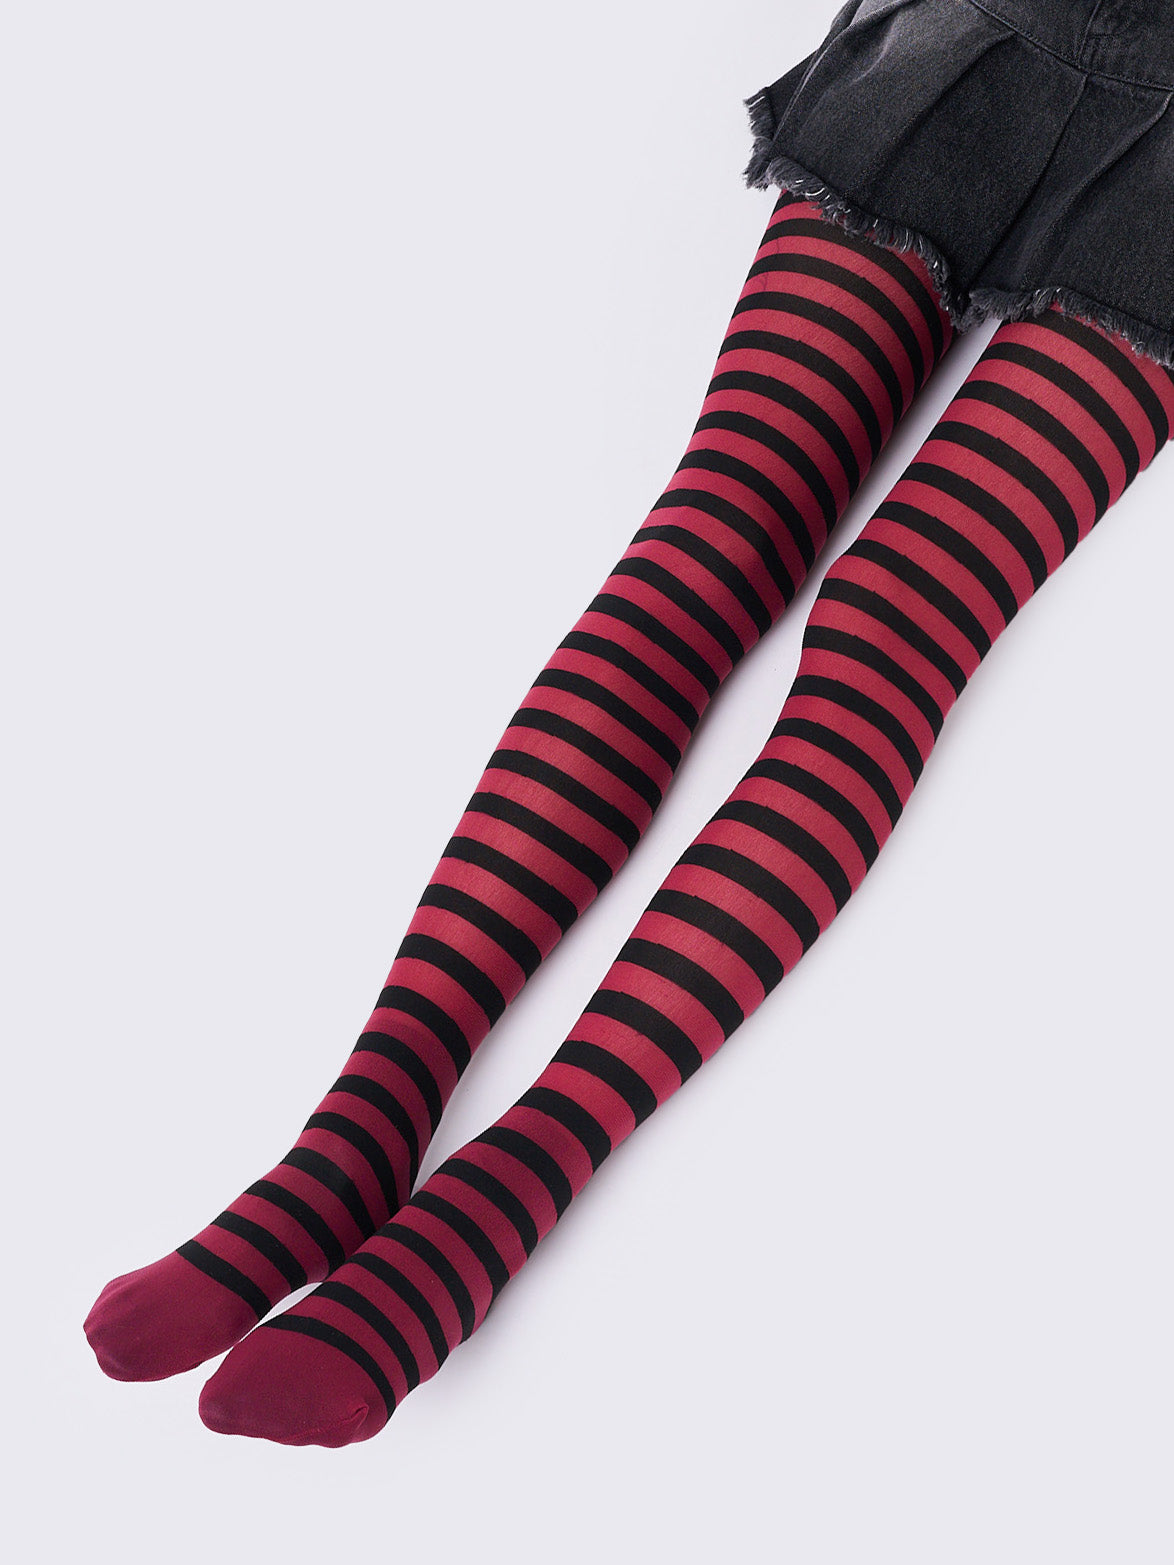 Aoki Red & Black Striped Tights